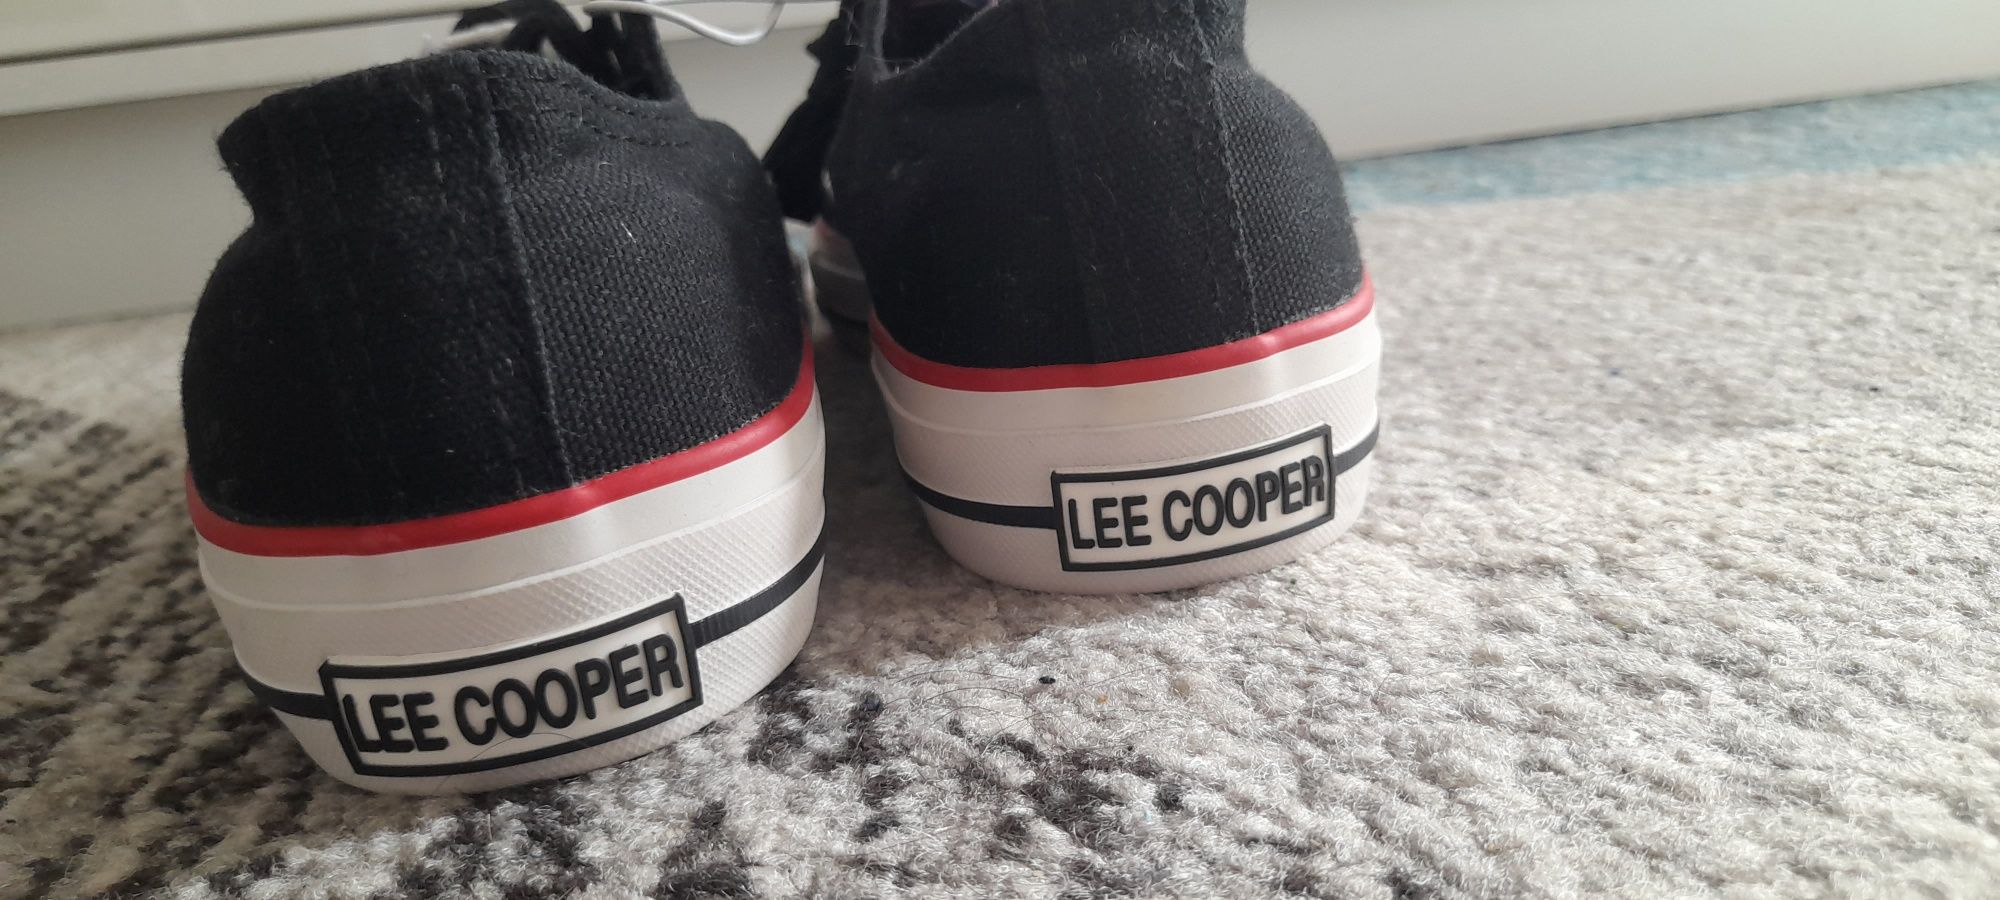 Lee Cooper trampki czarne rozmiar 40